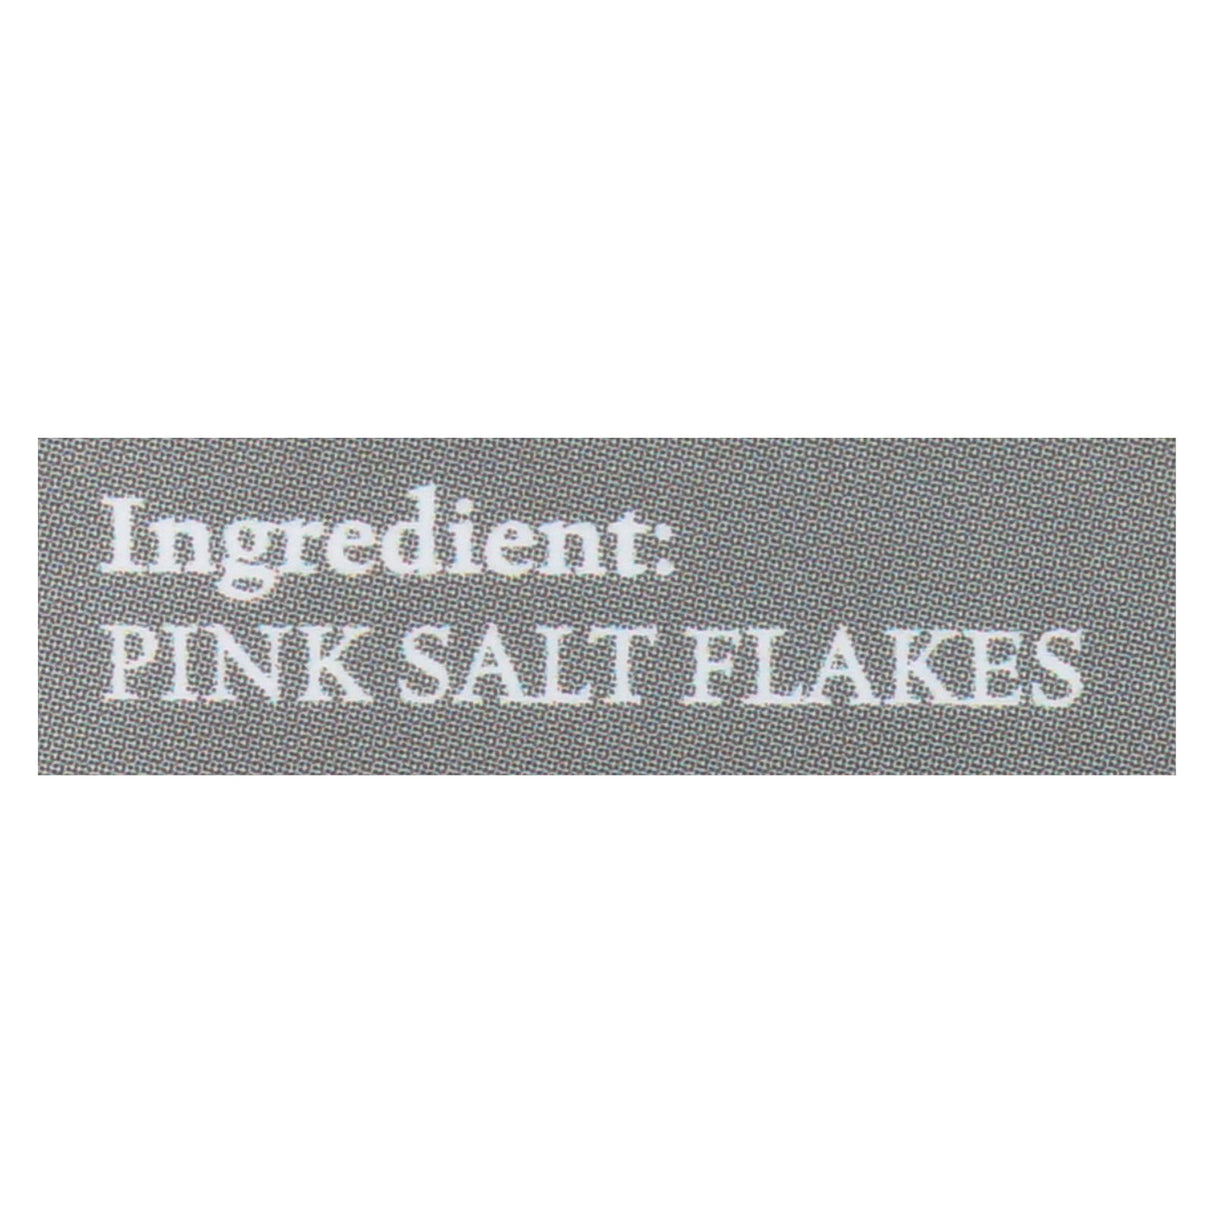 Himalayan Pink Salt Flakes 4-Ounce Jars (Case of 6) - Cozy Farm 